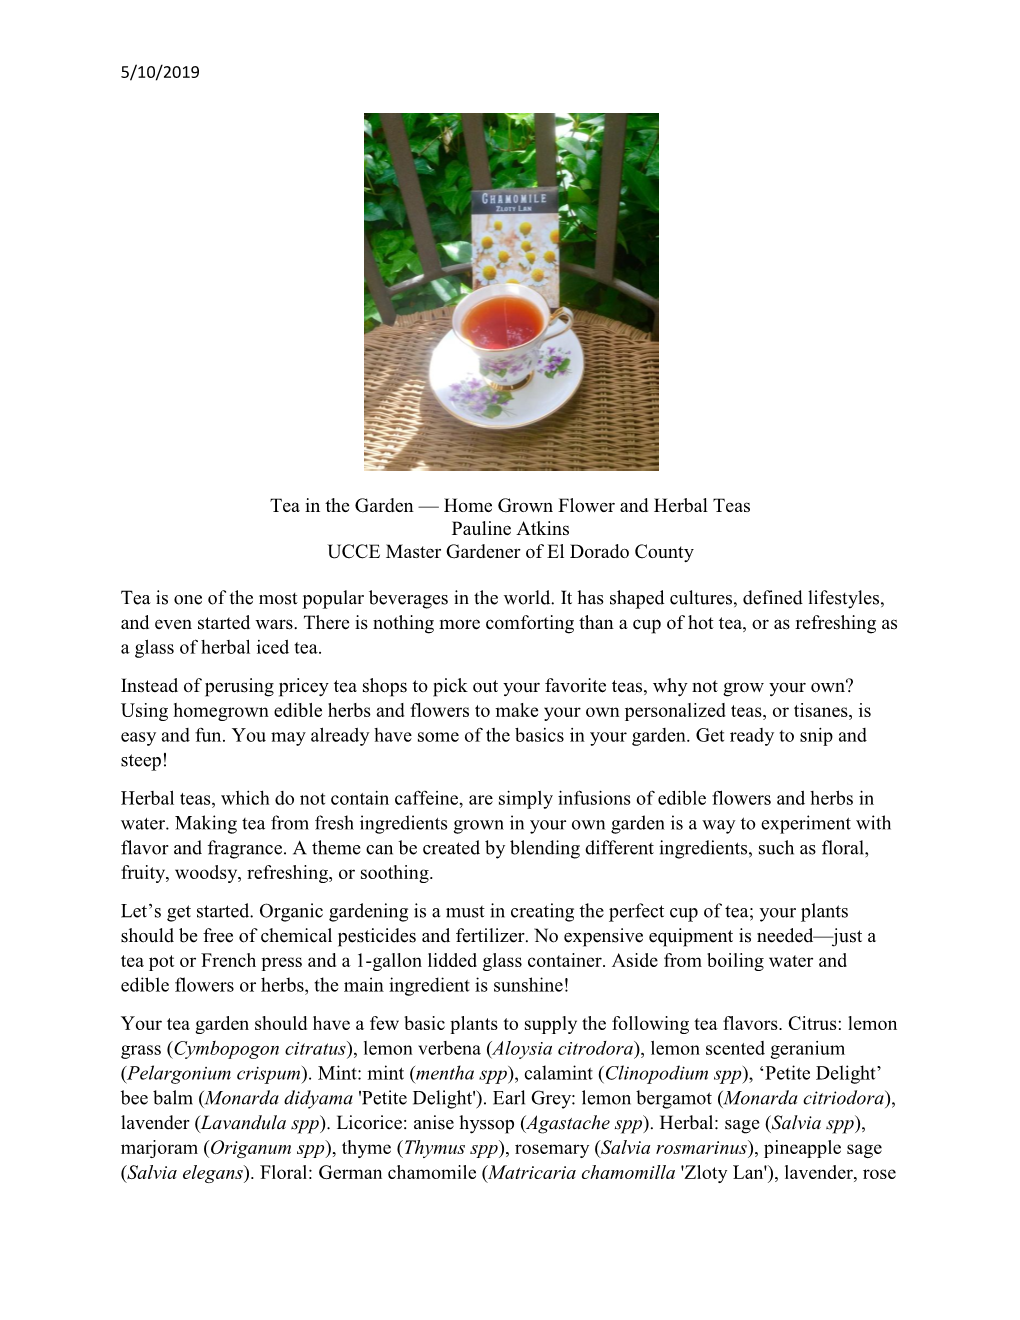 Tea in the Garden — Home Grown Flower and Herbal Teas Pauline Atkins UCCE Master Gardener of El Dorado County